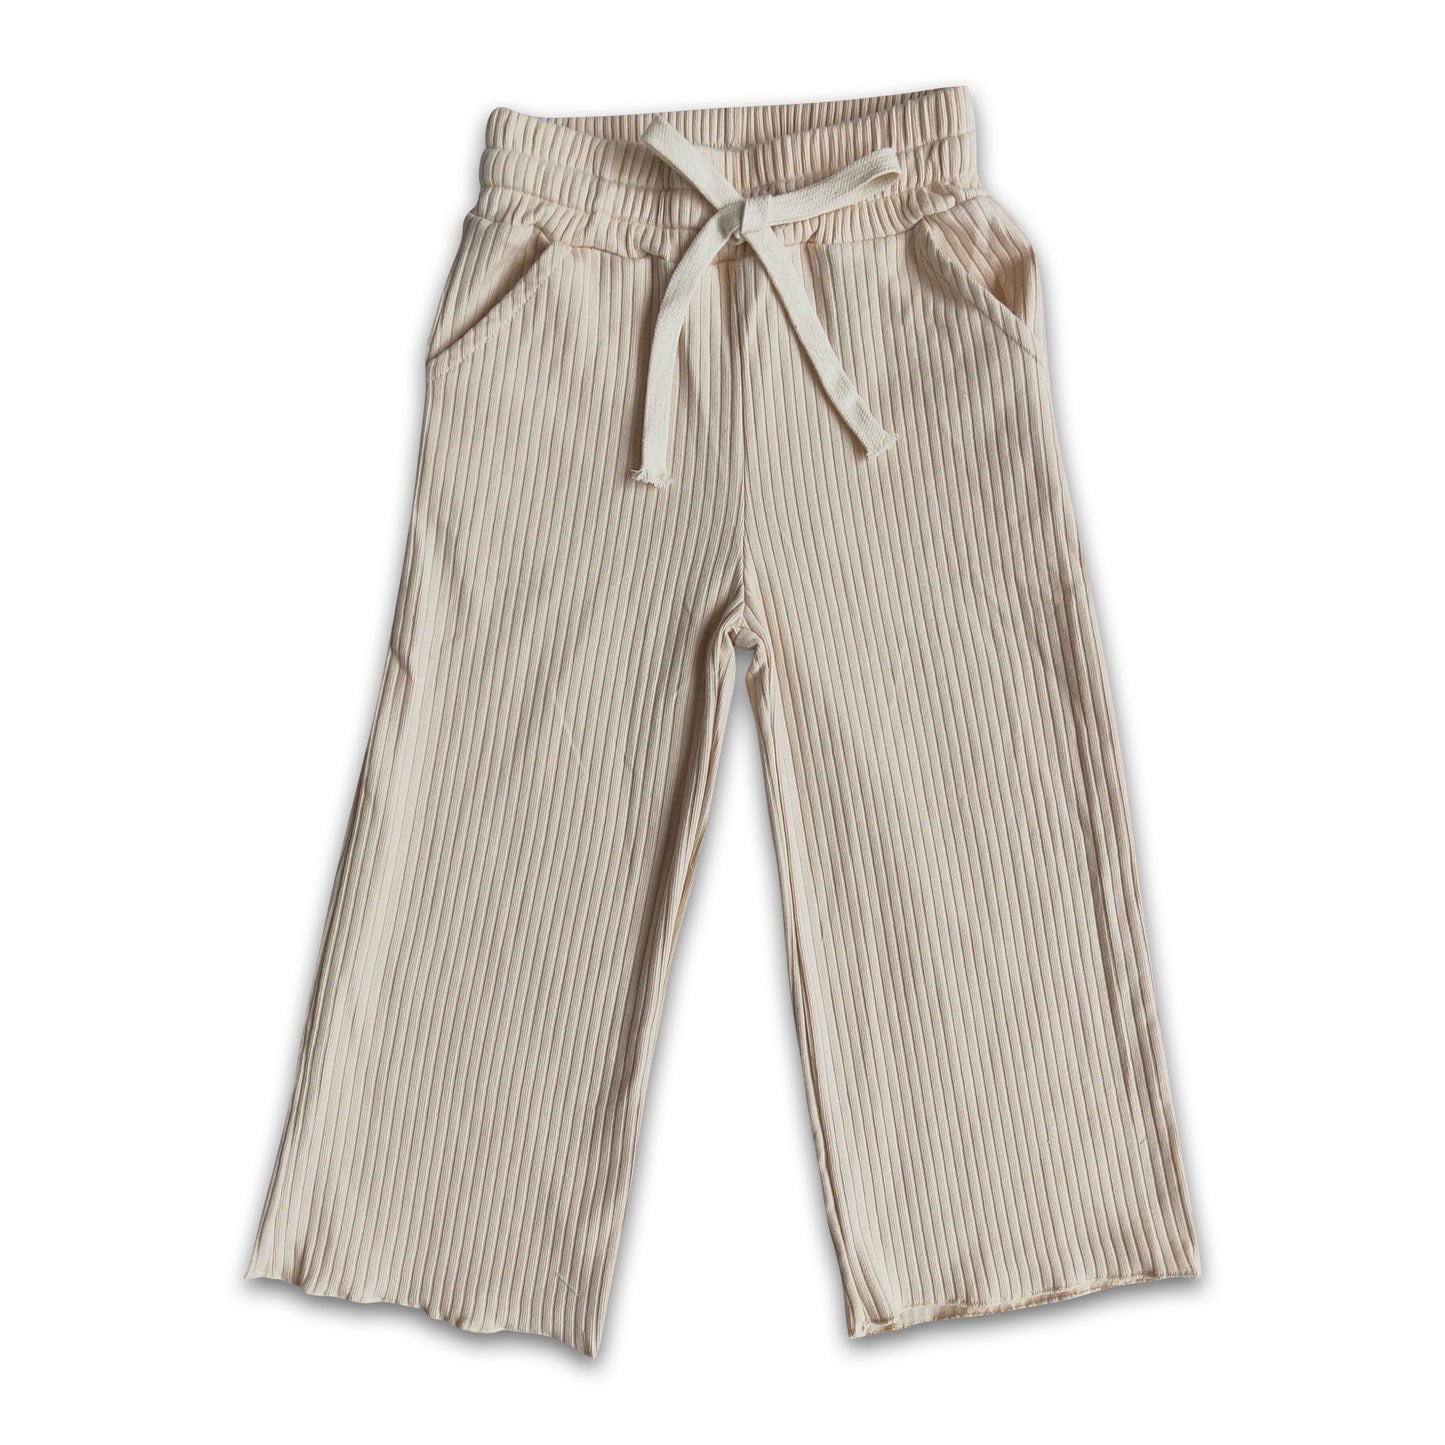 Khaki stripe cotton elastic waistband pants